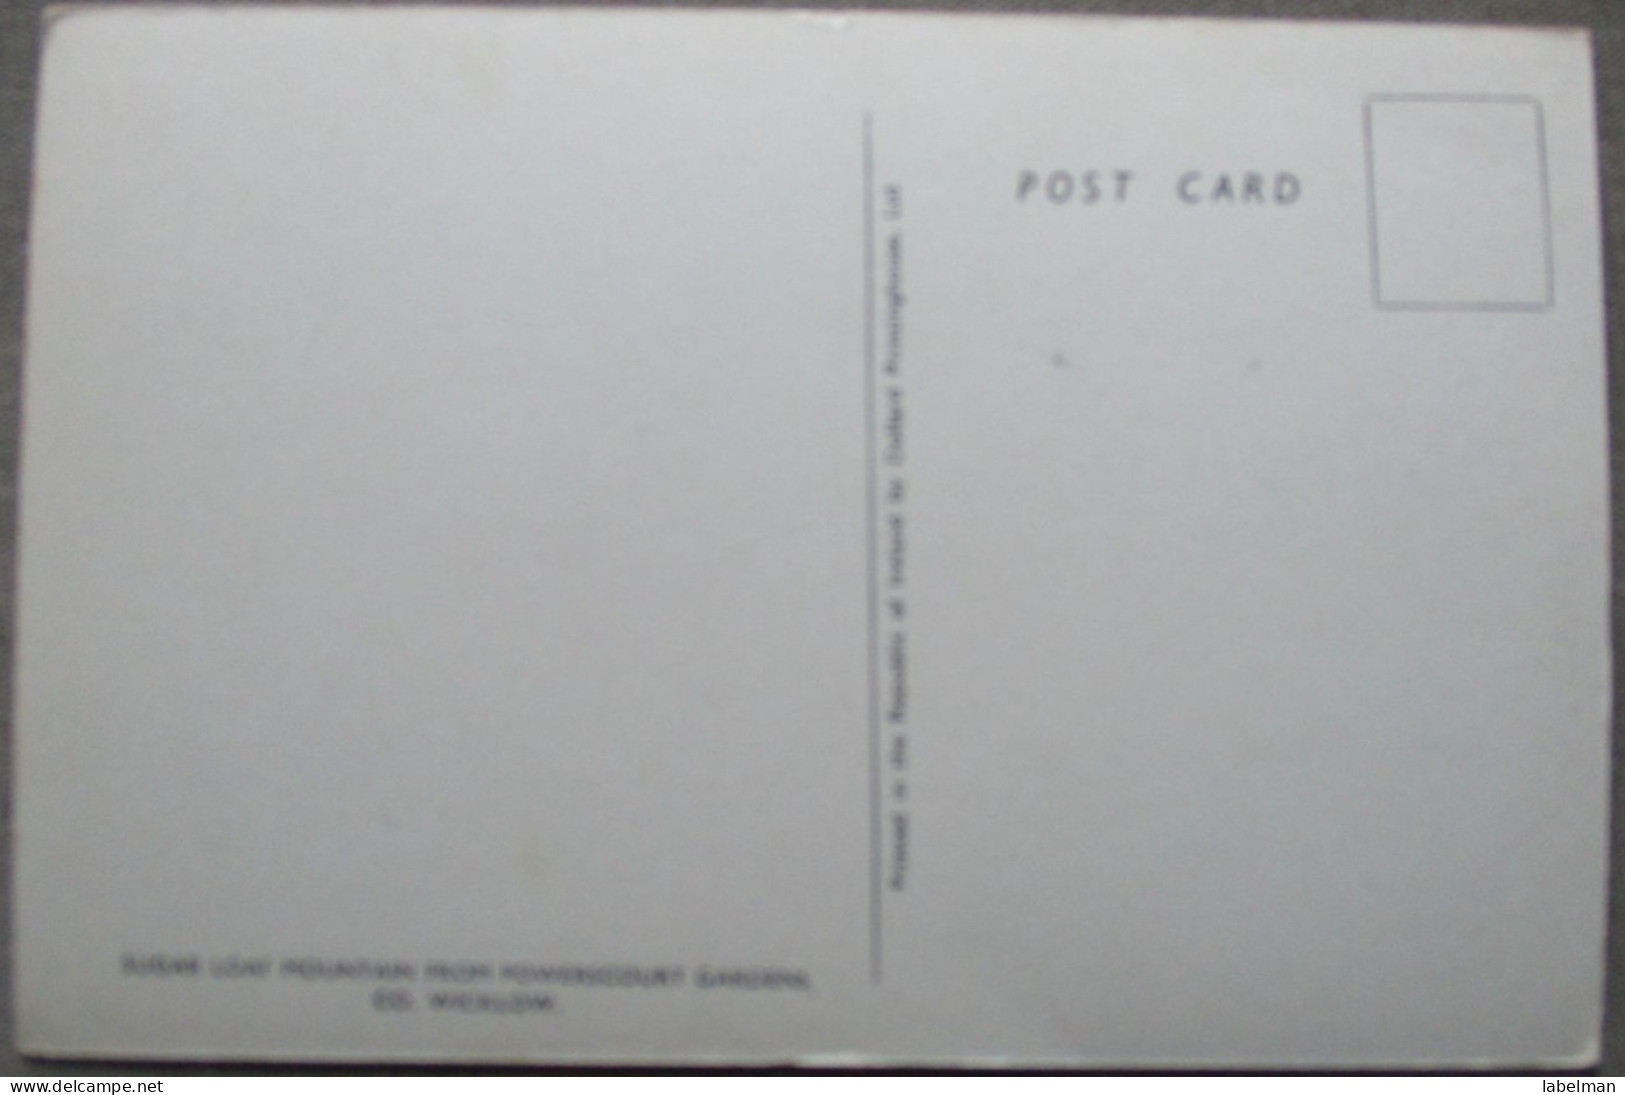 IRLAND UK UNITED KINGDOM WICKLOW SUGAR LOAF MT KARTE CARD POSTKARTE POSTCARD ANSICHTSKARTE CARTOLINA CARTE POSTALE - Collezioni E Lotti